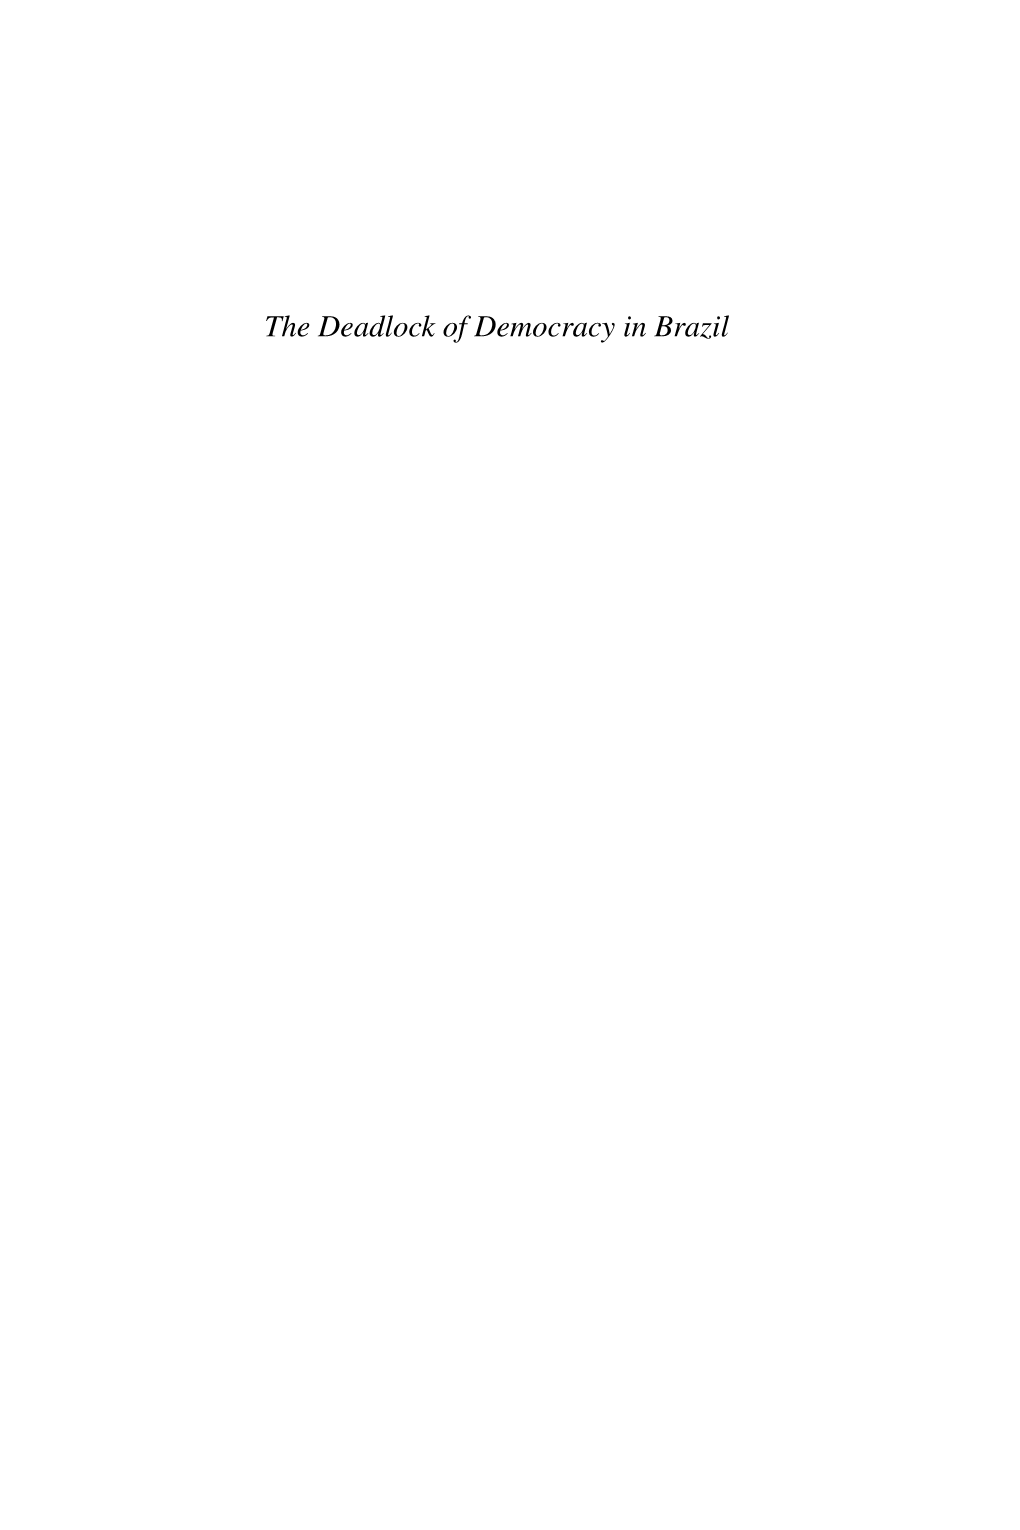 The Deadlock of Democracy in Brazil the Deadlock of Democracy in Brazil